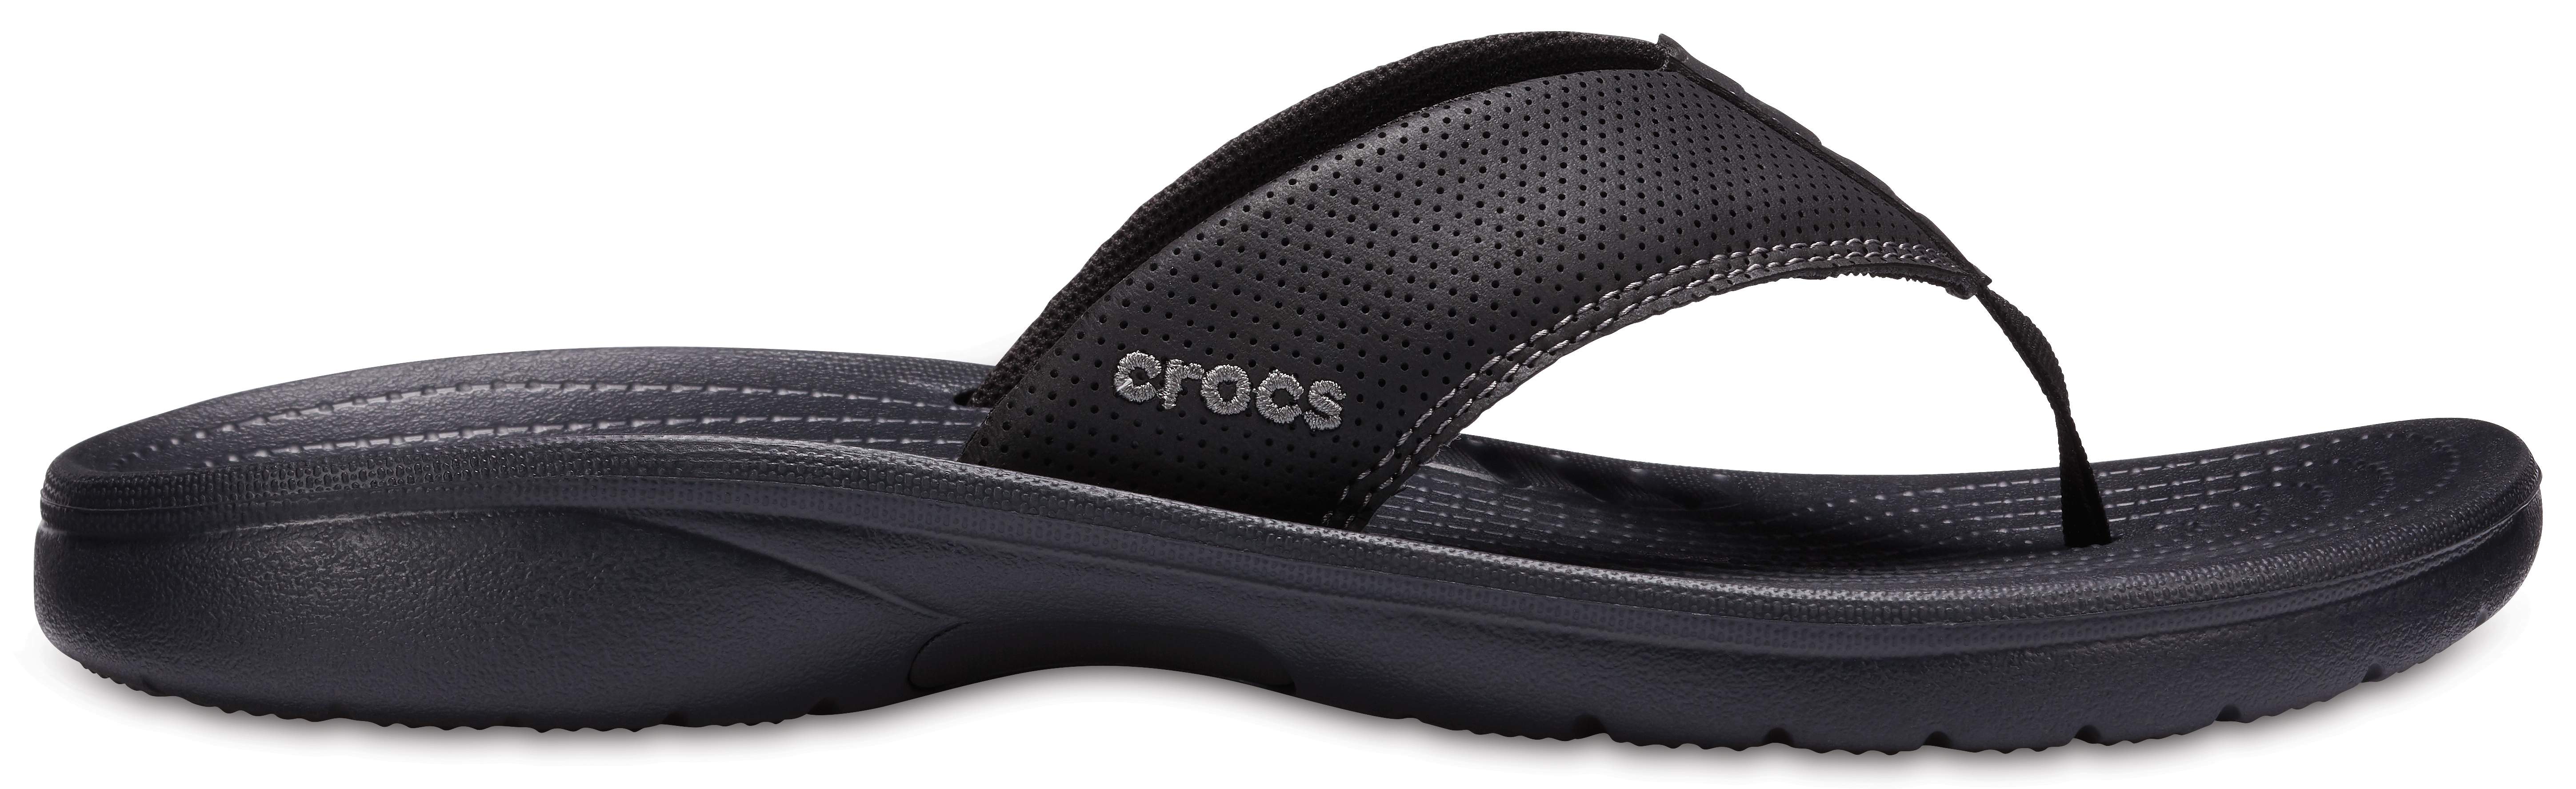 crocs men's bogota flip